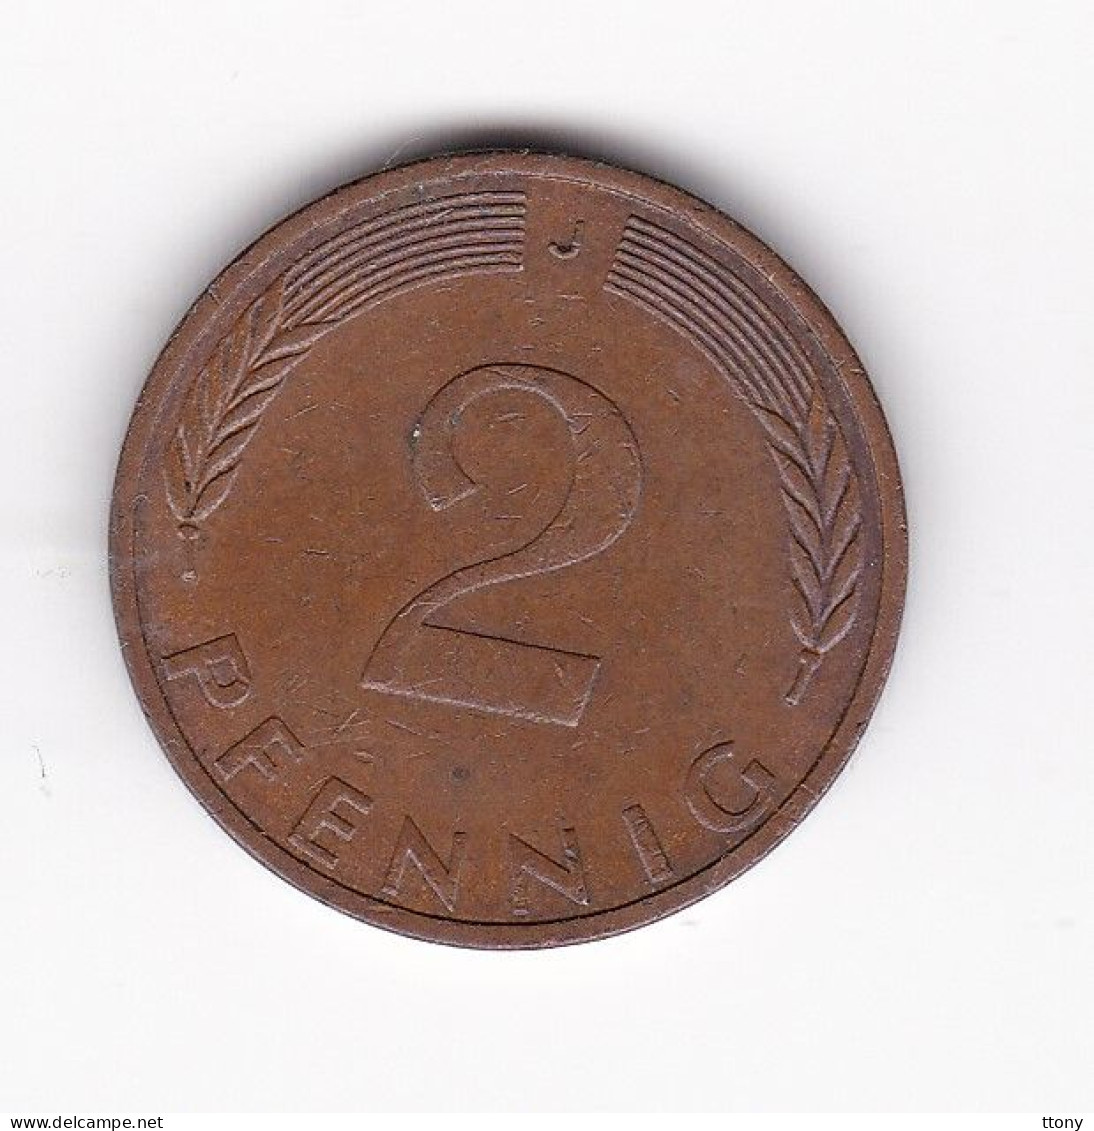 Une Pièce Monnaie  Allemagne  2  Pfennig  Année 1974 Frappe  J - 2 Pfennig